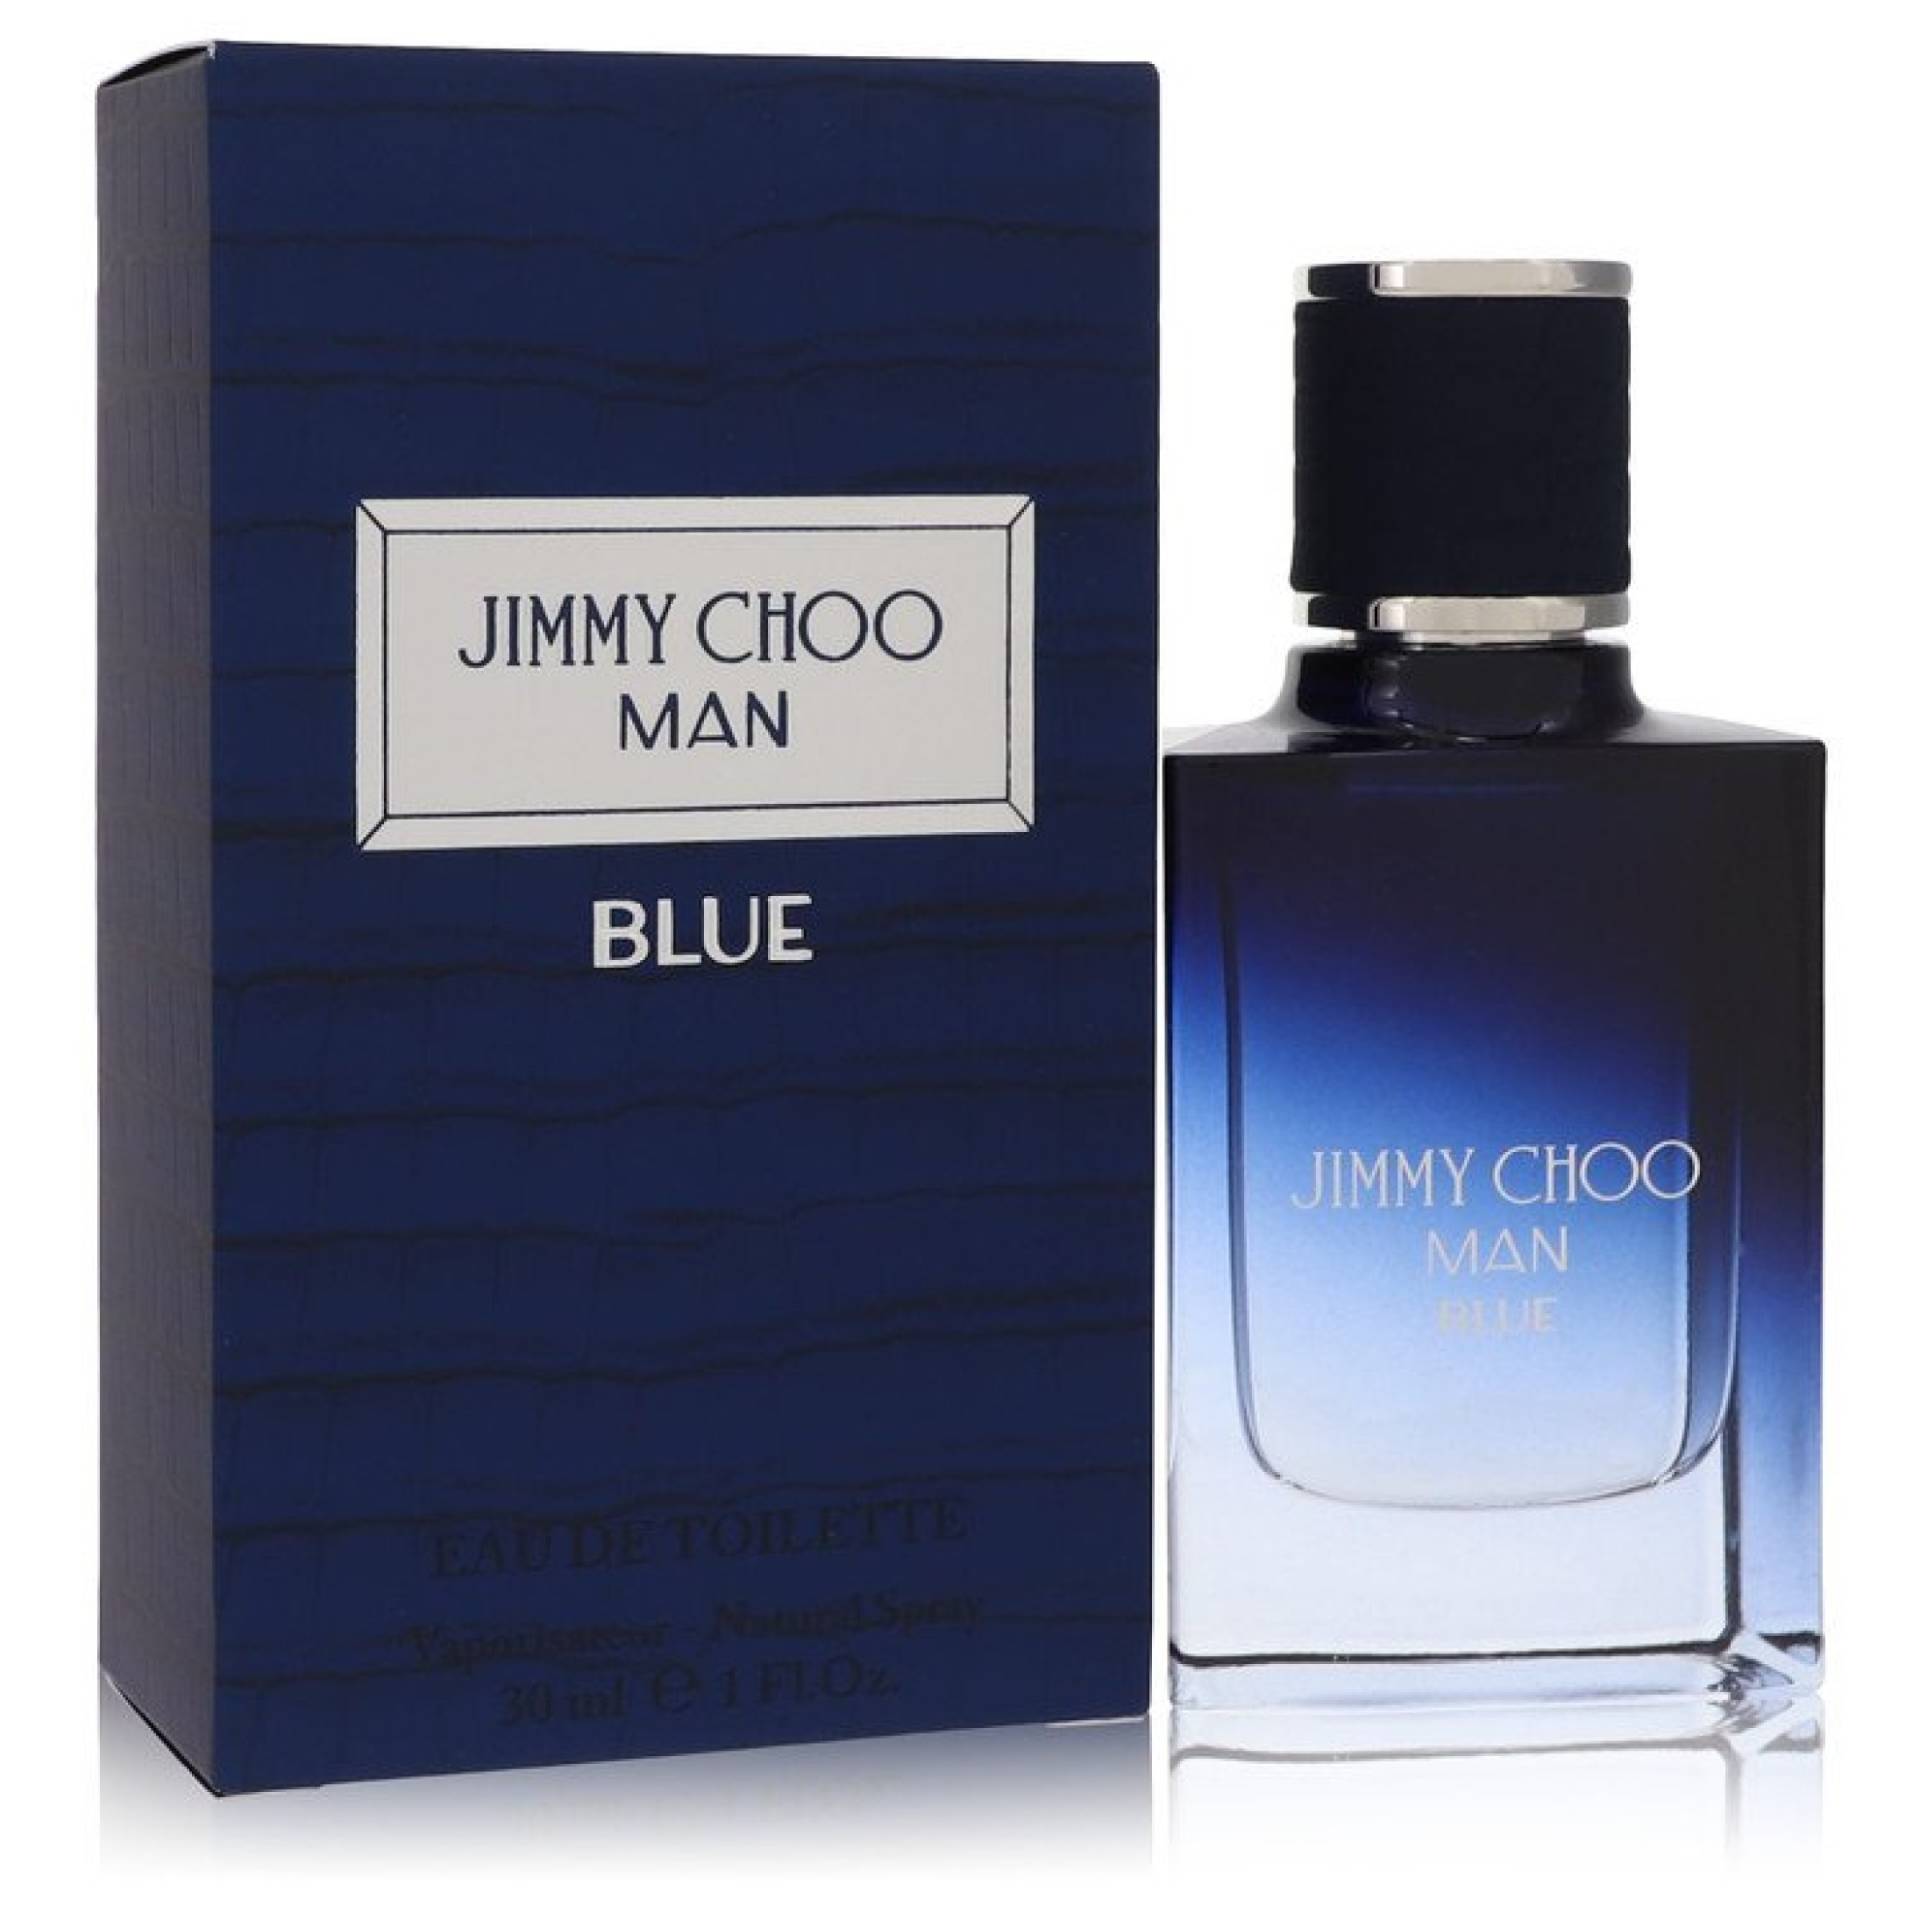 Jimmy Choo Man Blue Eau De Toilette Spray 30 ml von Jimmy Choo